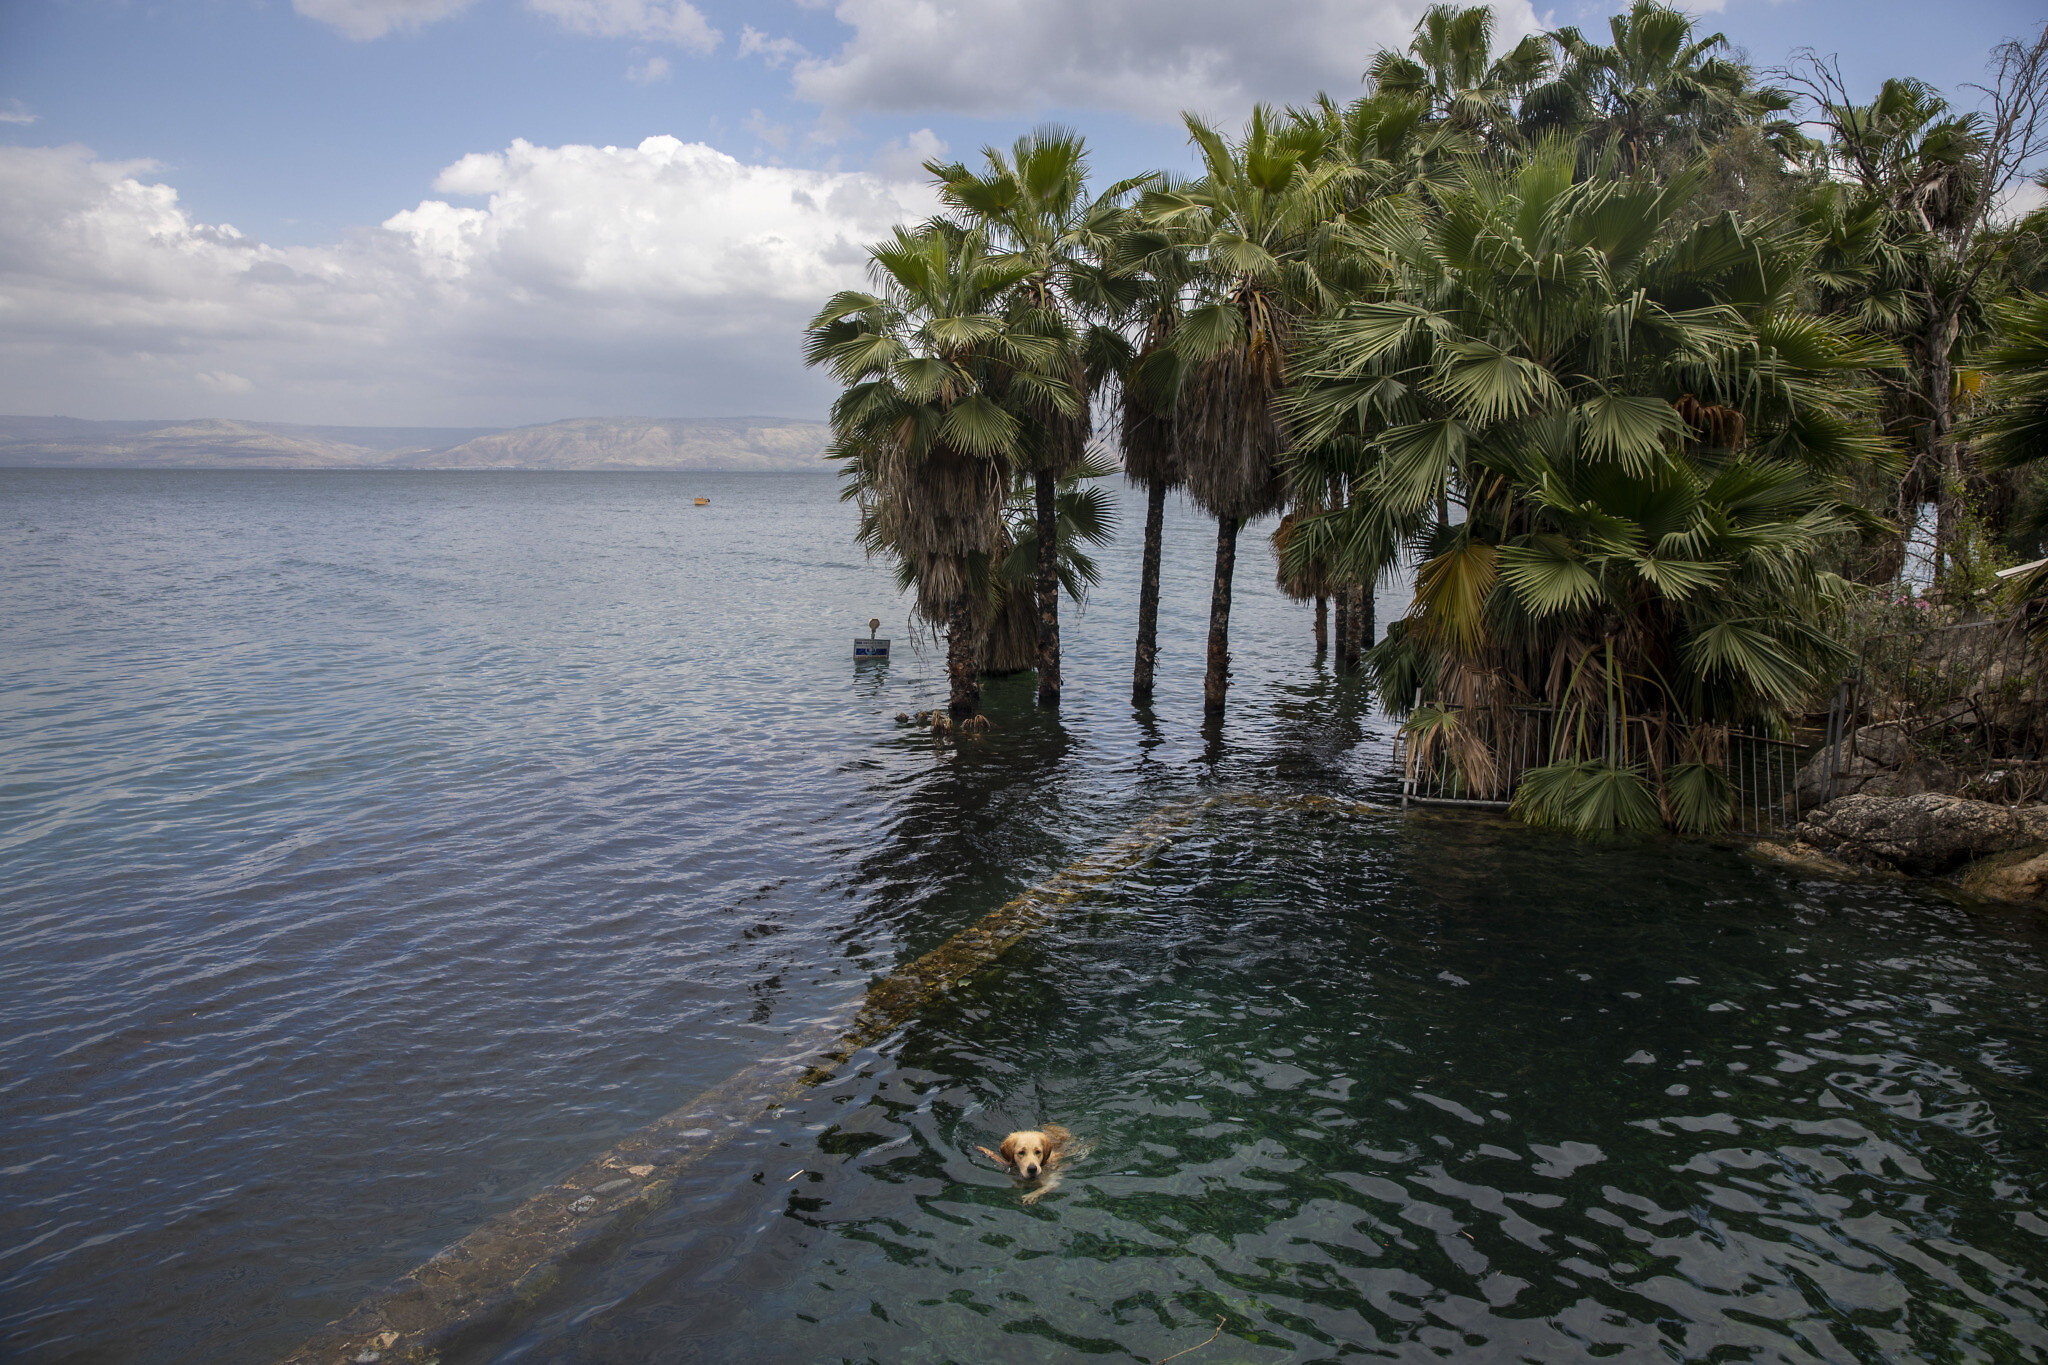 Sea of Galilee "EMPOWER IAS"